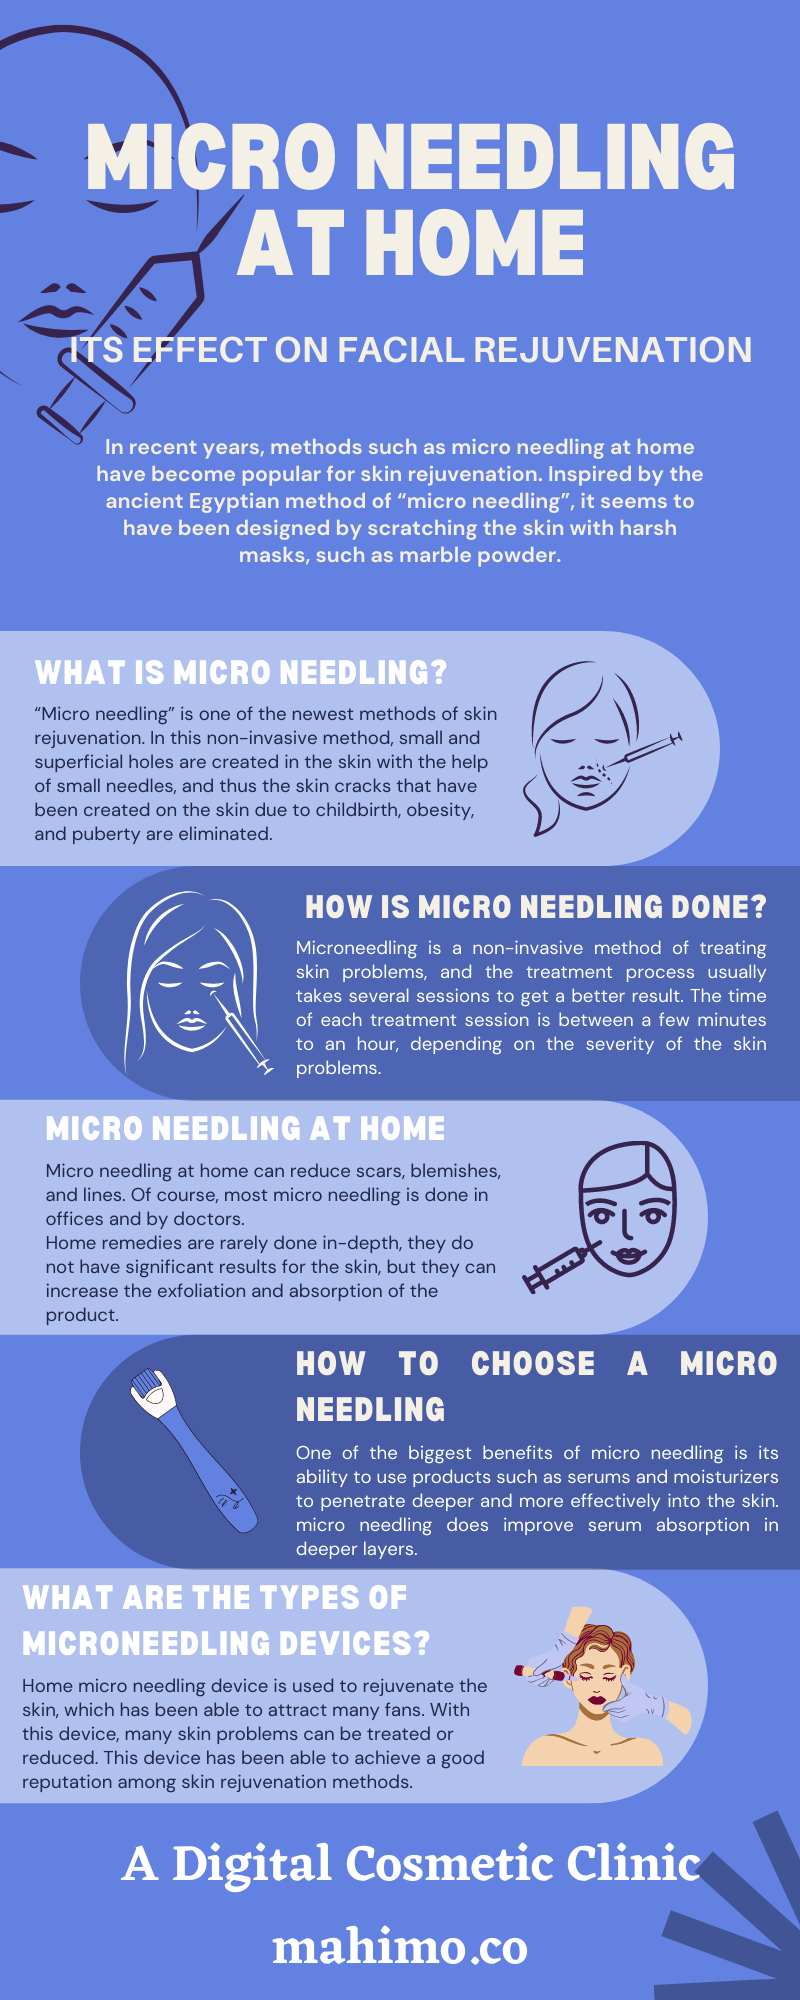 Micro needling at home